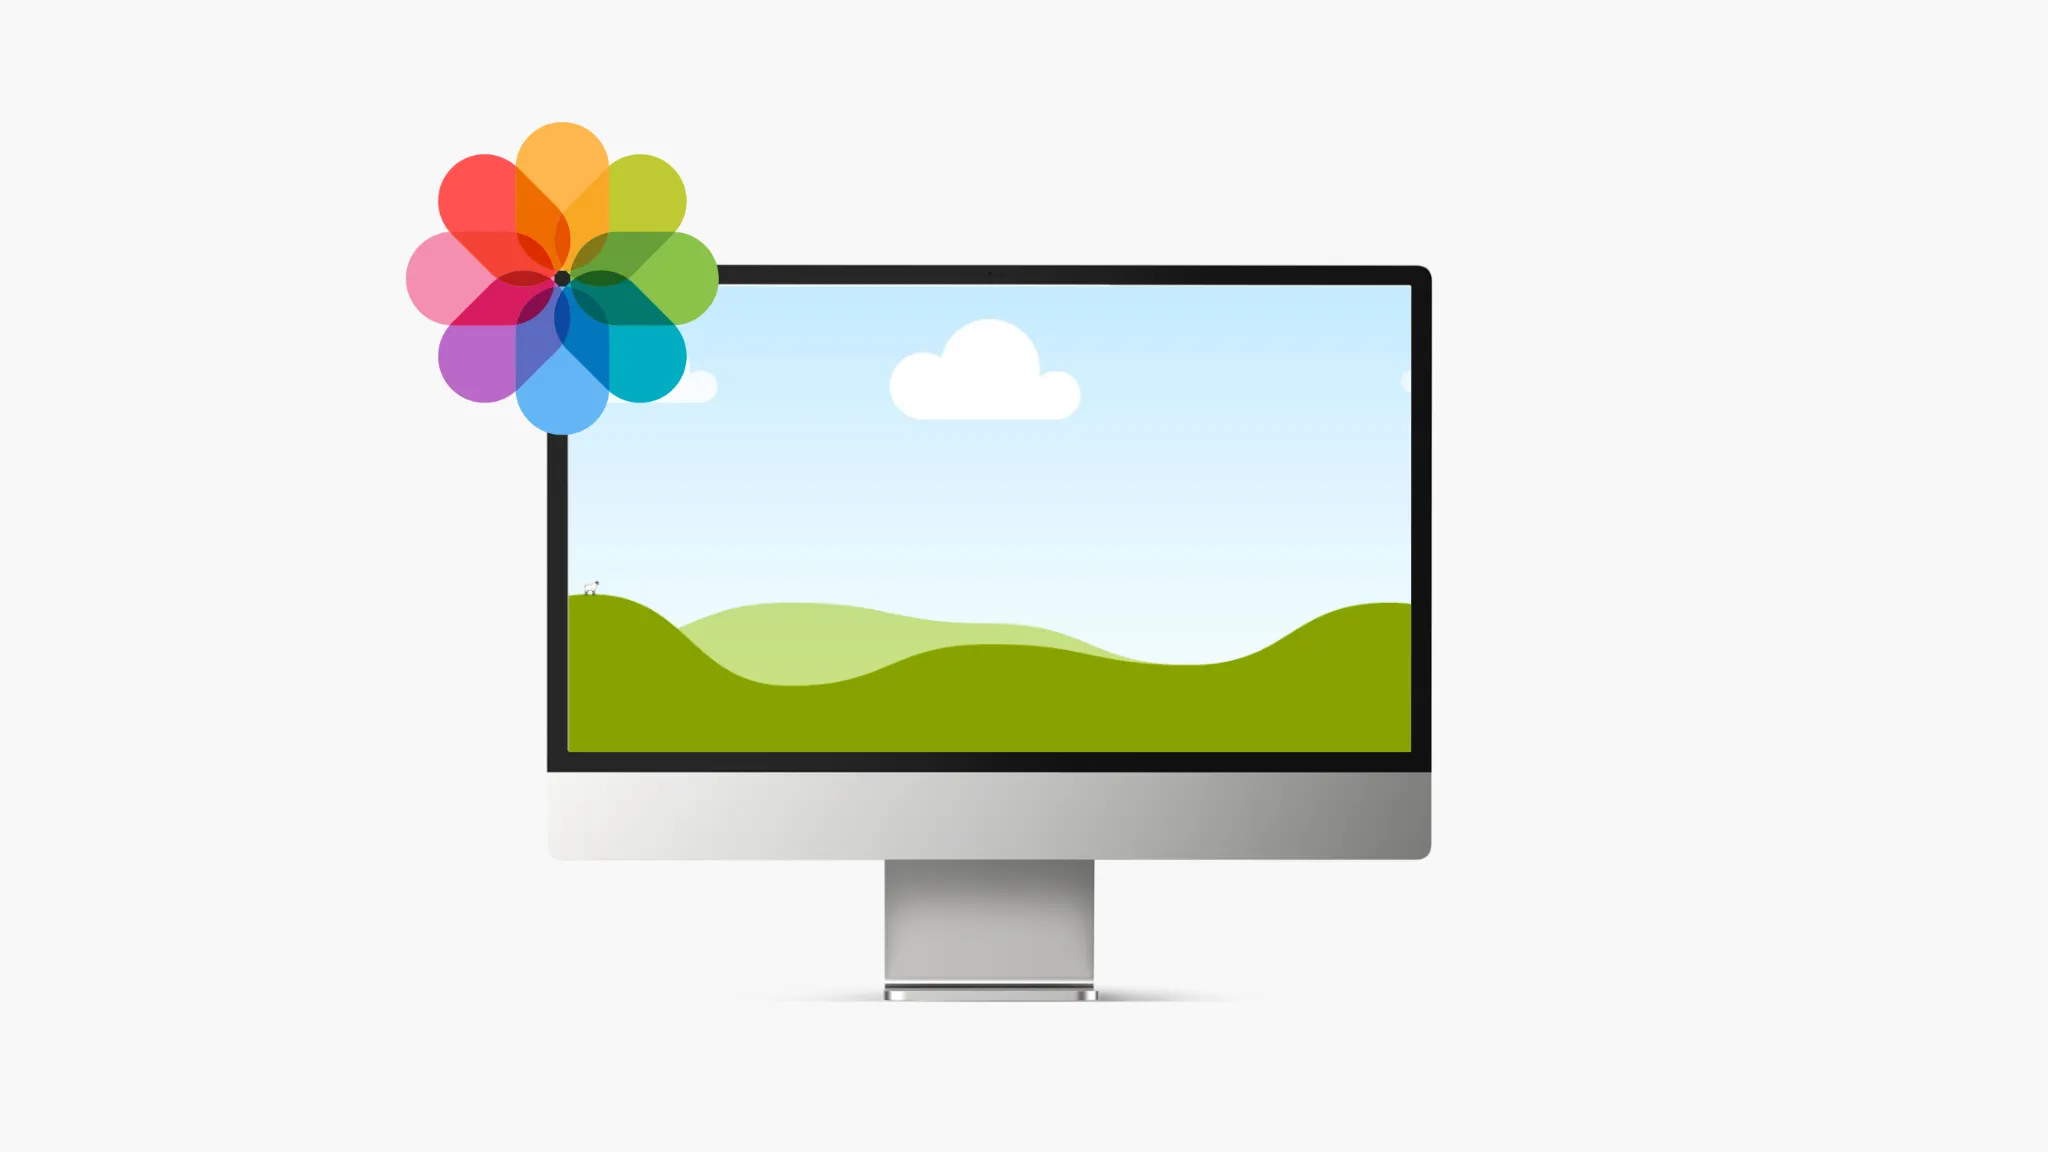 Launch the Apple Photos app on your Mac